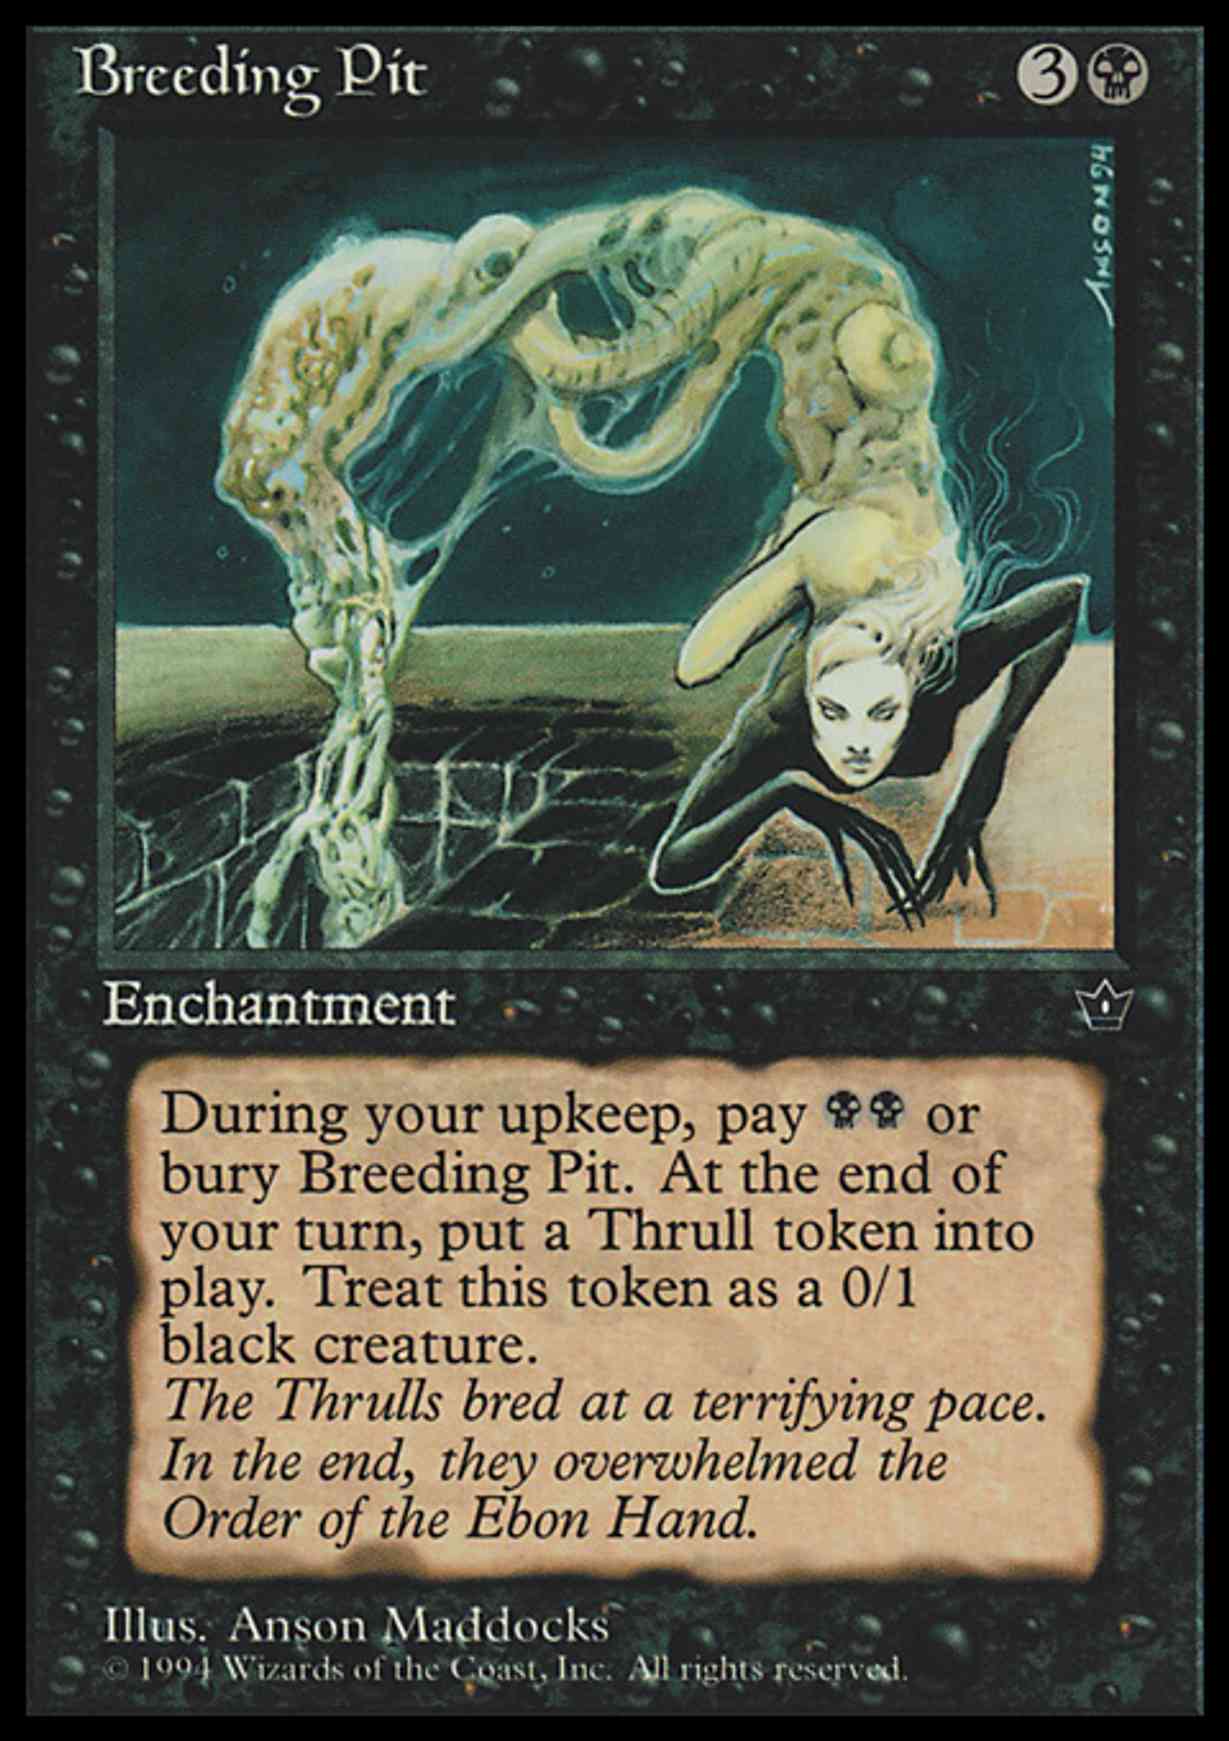 Breeding Pit magic card front